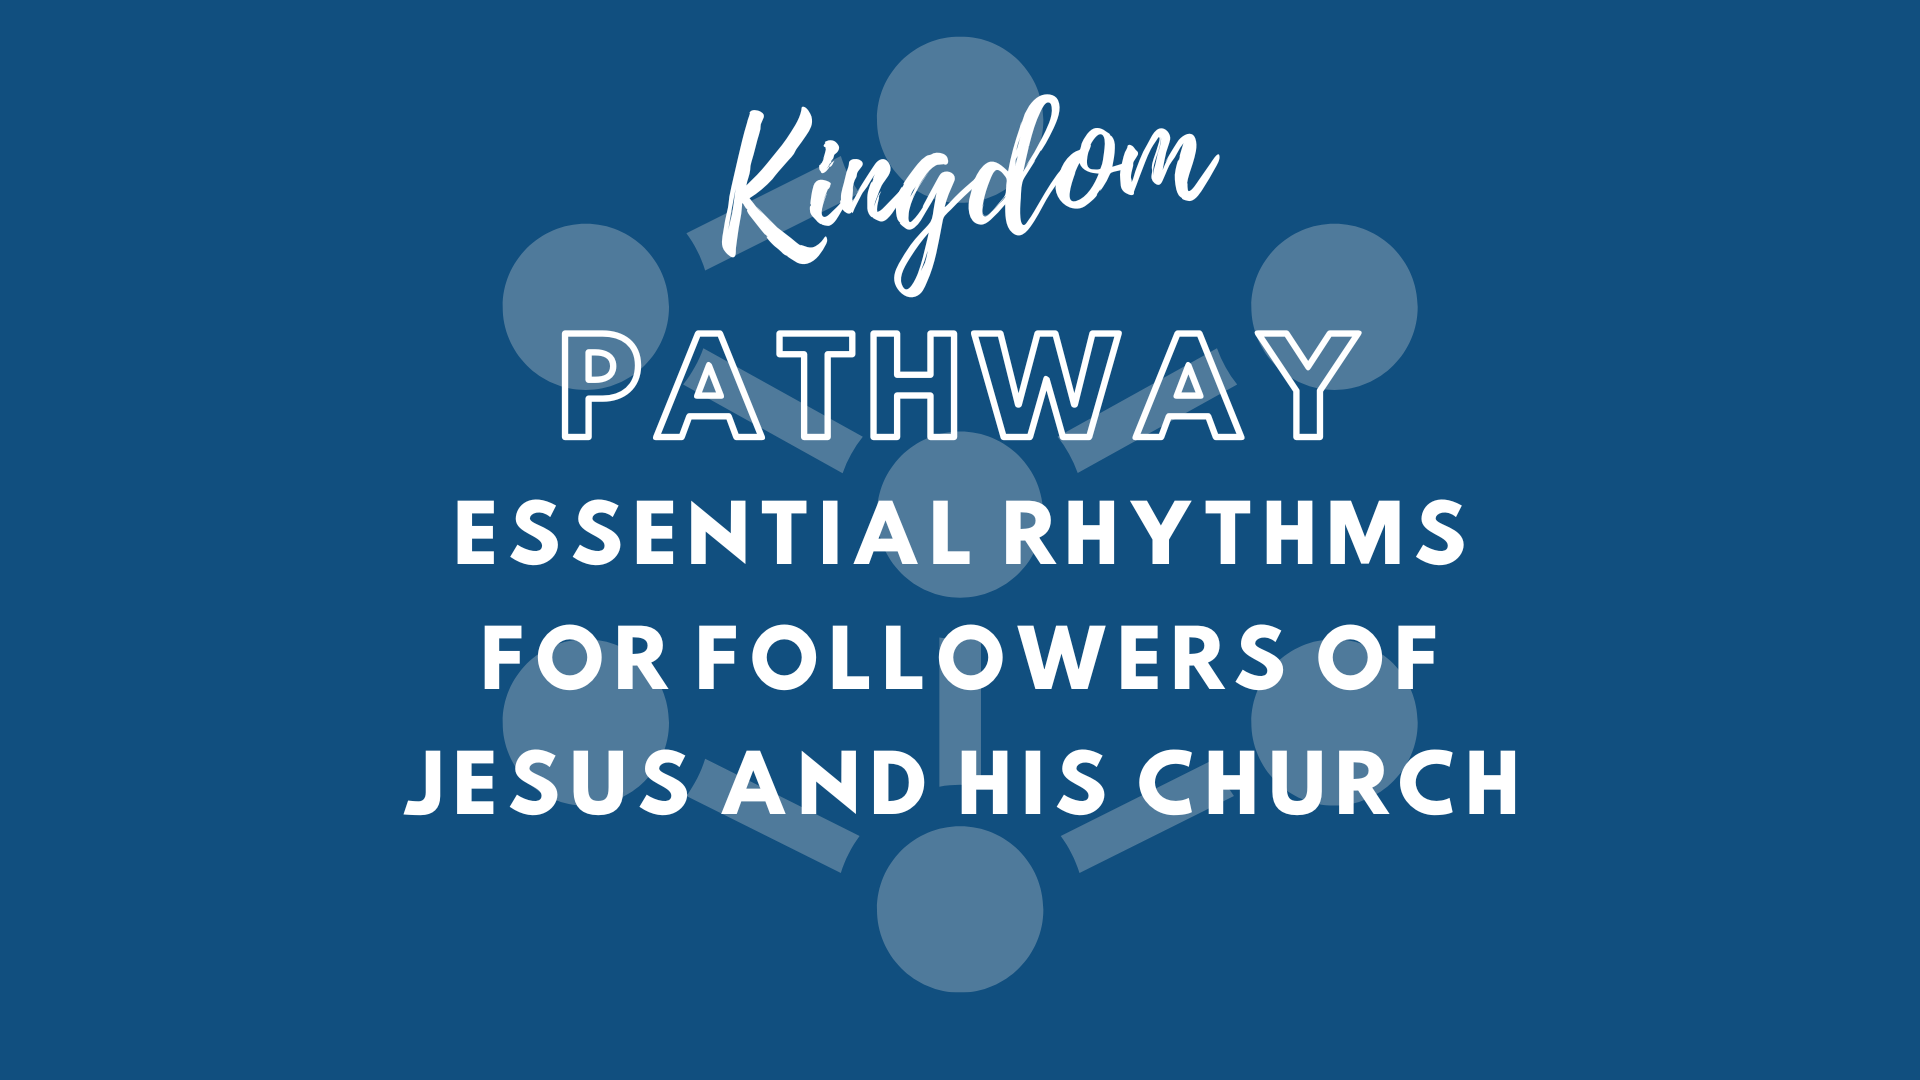 Kingdom Pathway